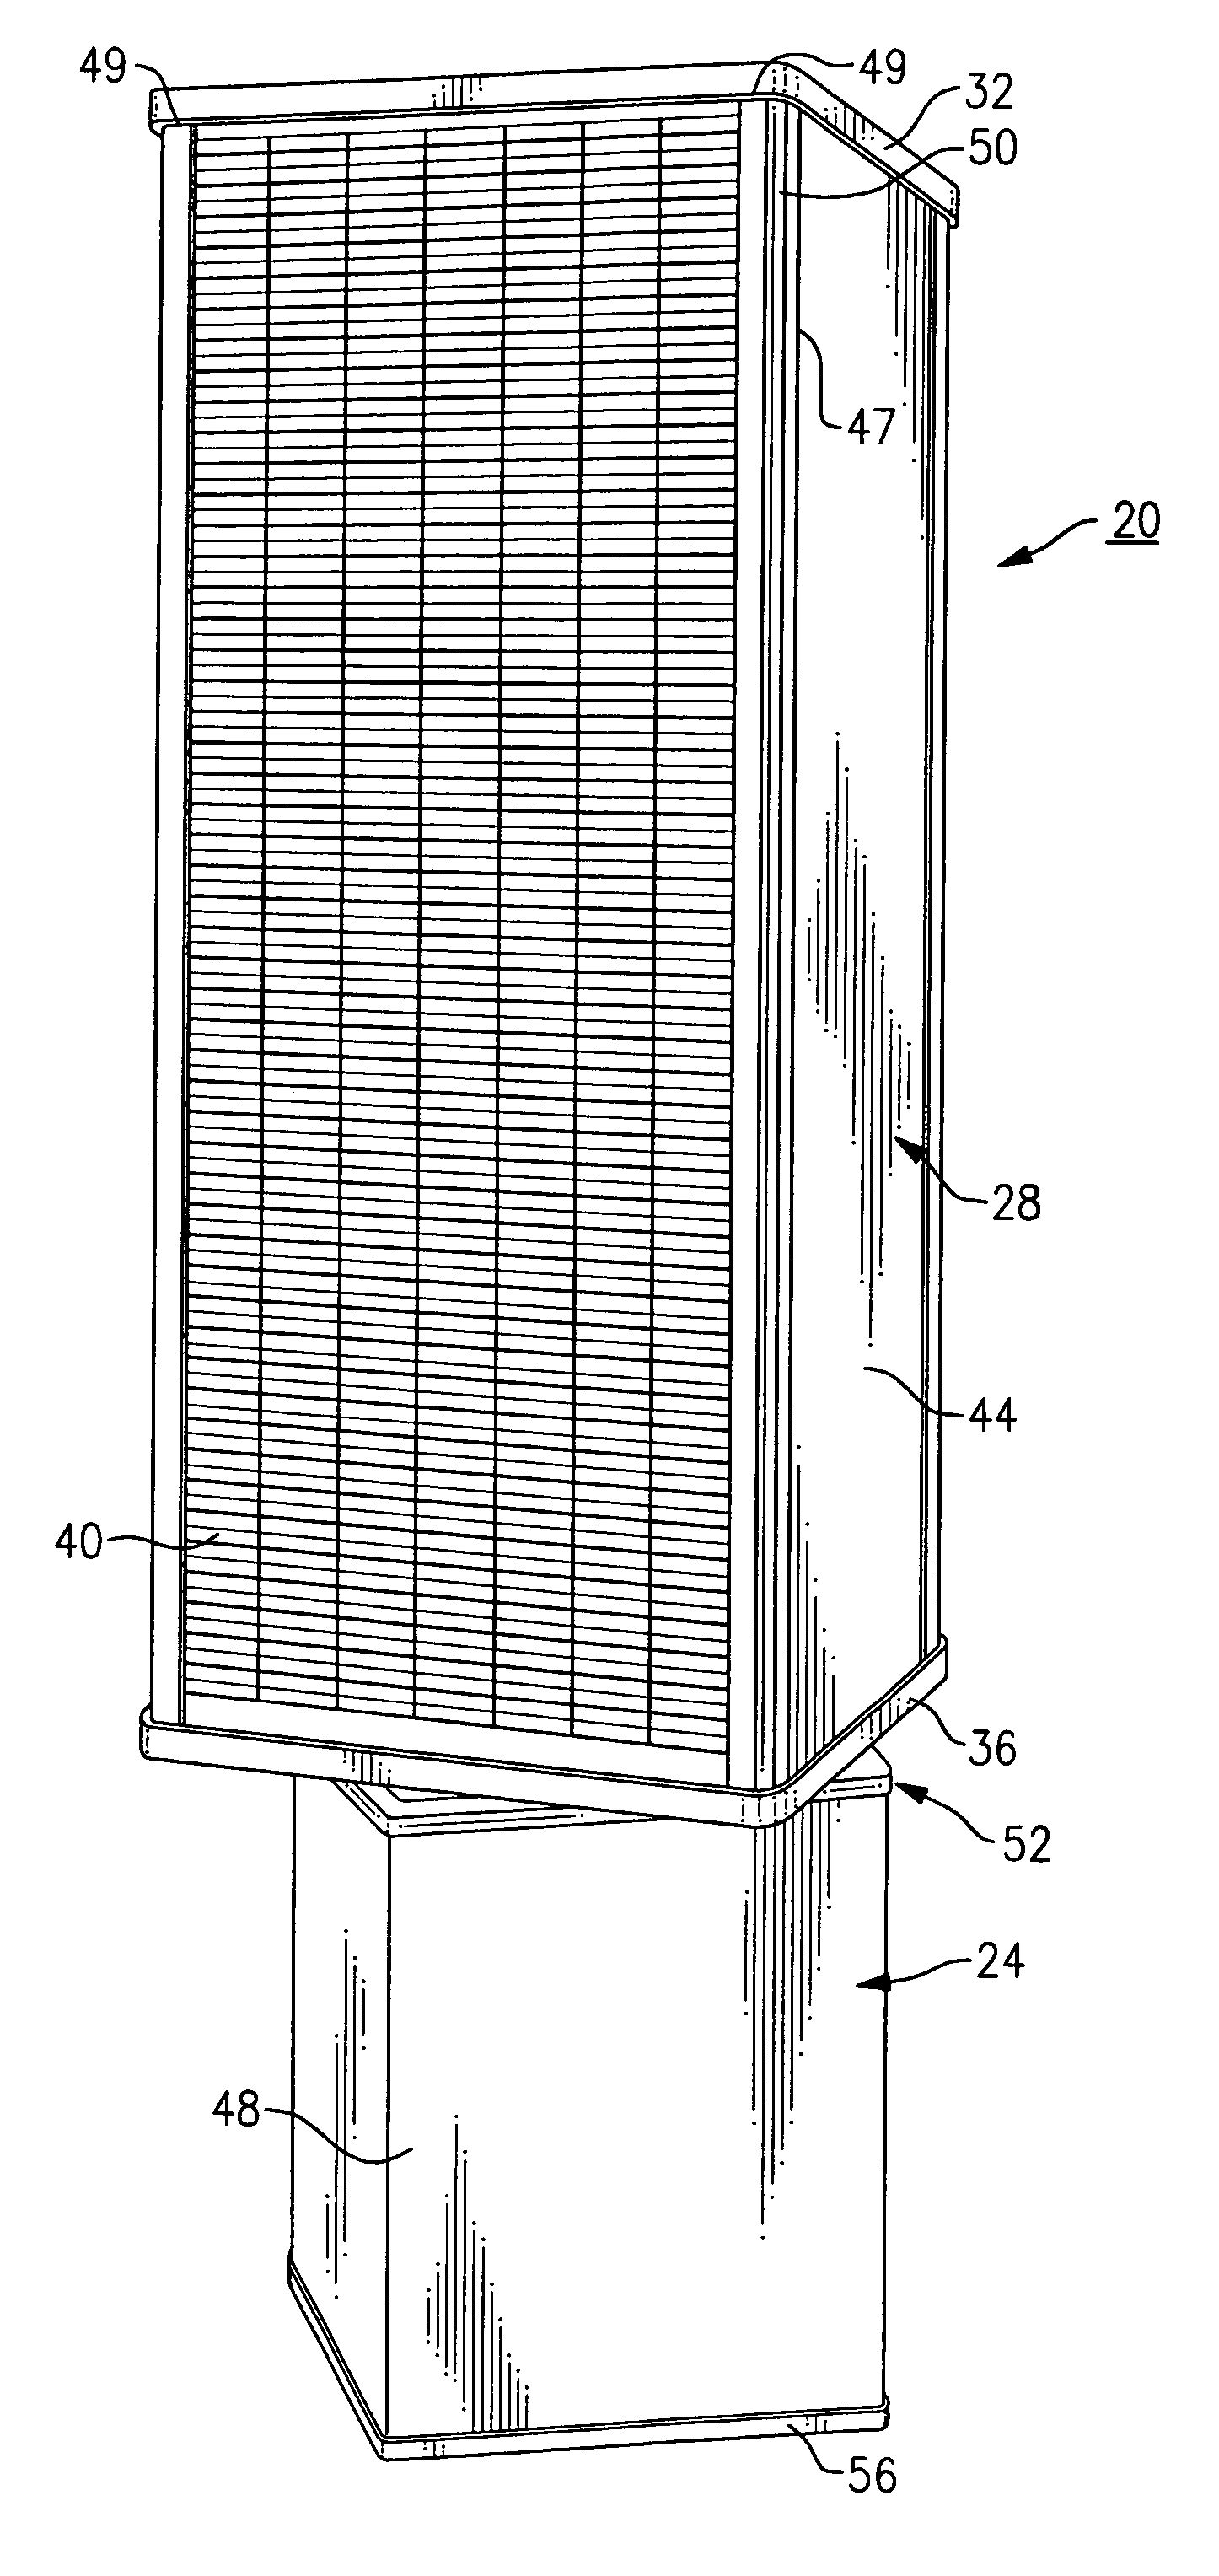 Rotatable display apparatus